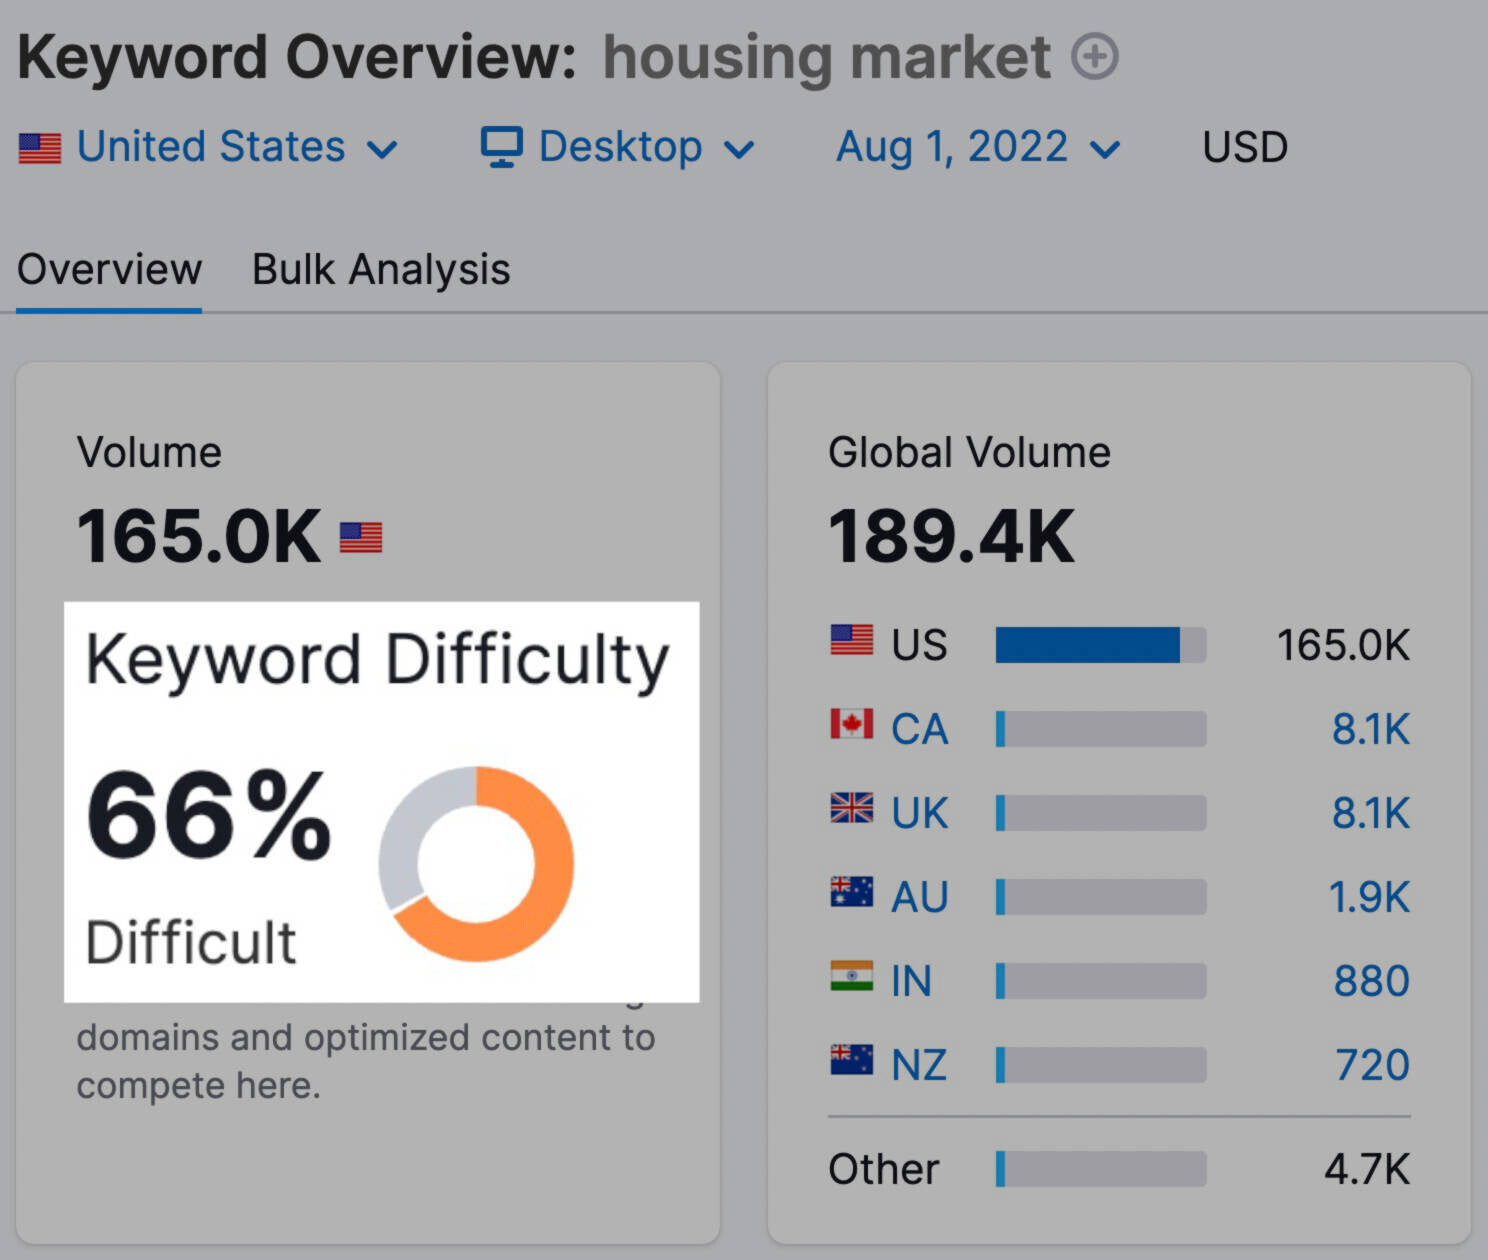 Regular keyword with keyword difficulty of 66%